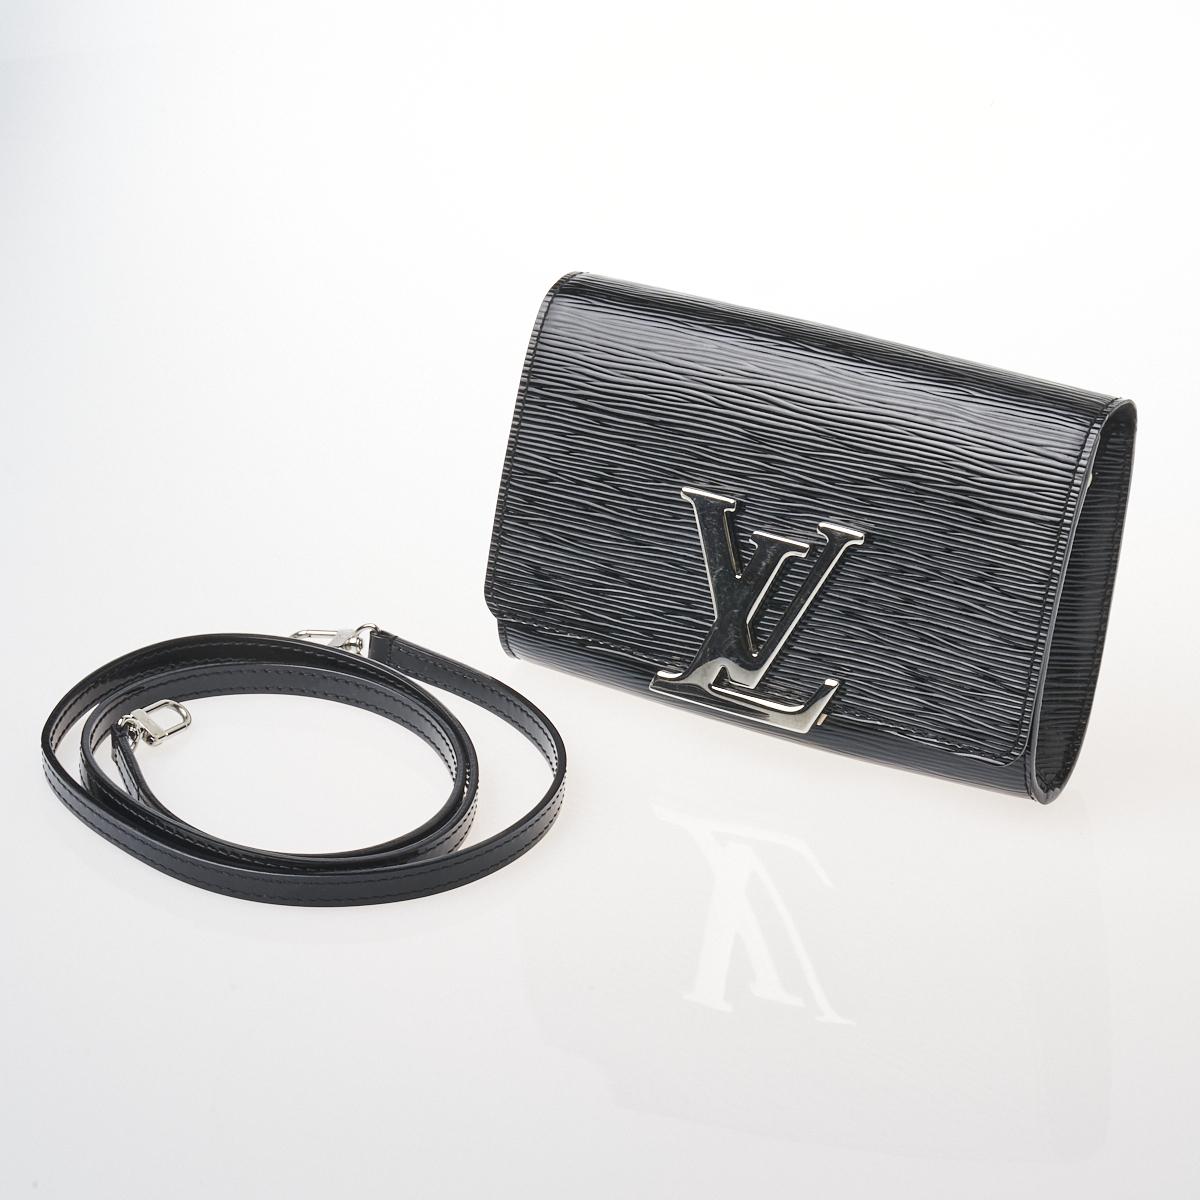 Louis Vuitton Louise Black Electric Epi Leather Bag